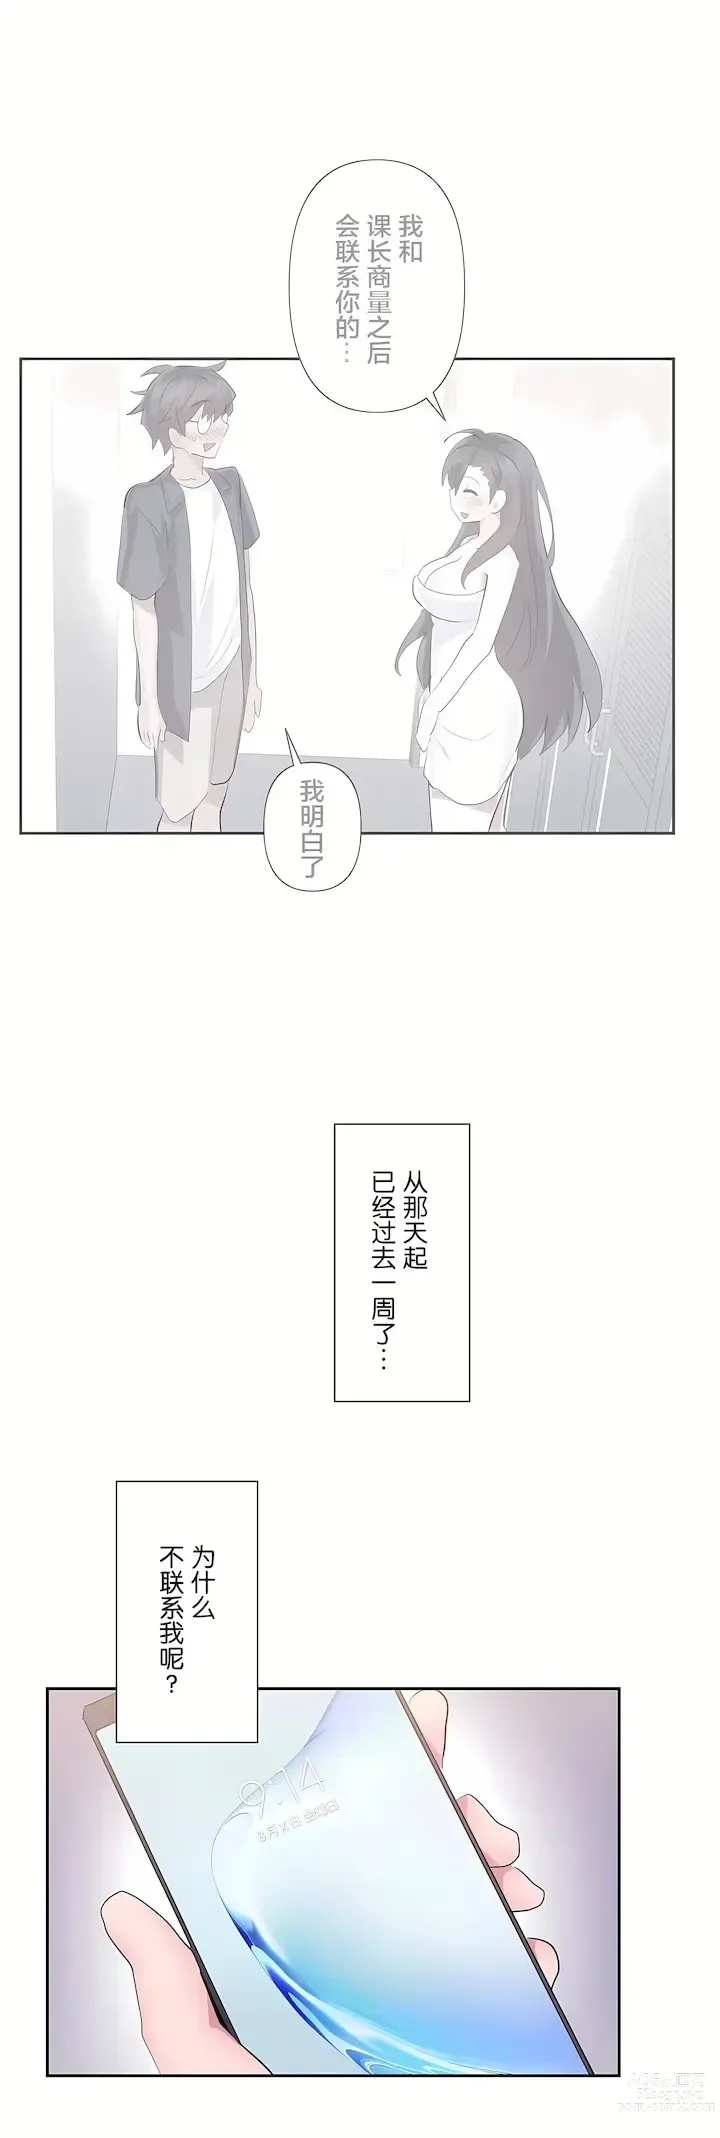 Page 4 of manga 爱爱仙境 LoveLove Wonder Land -online- 46-82